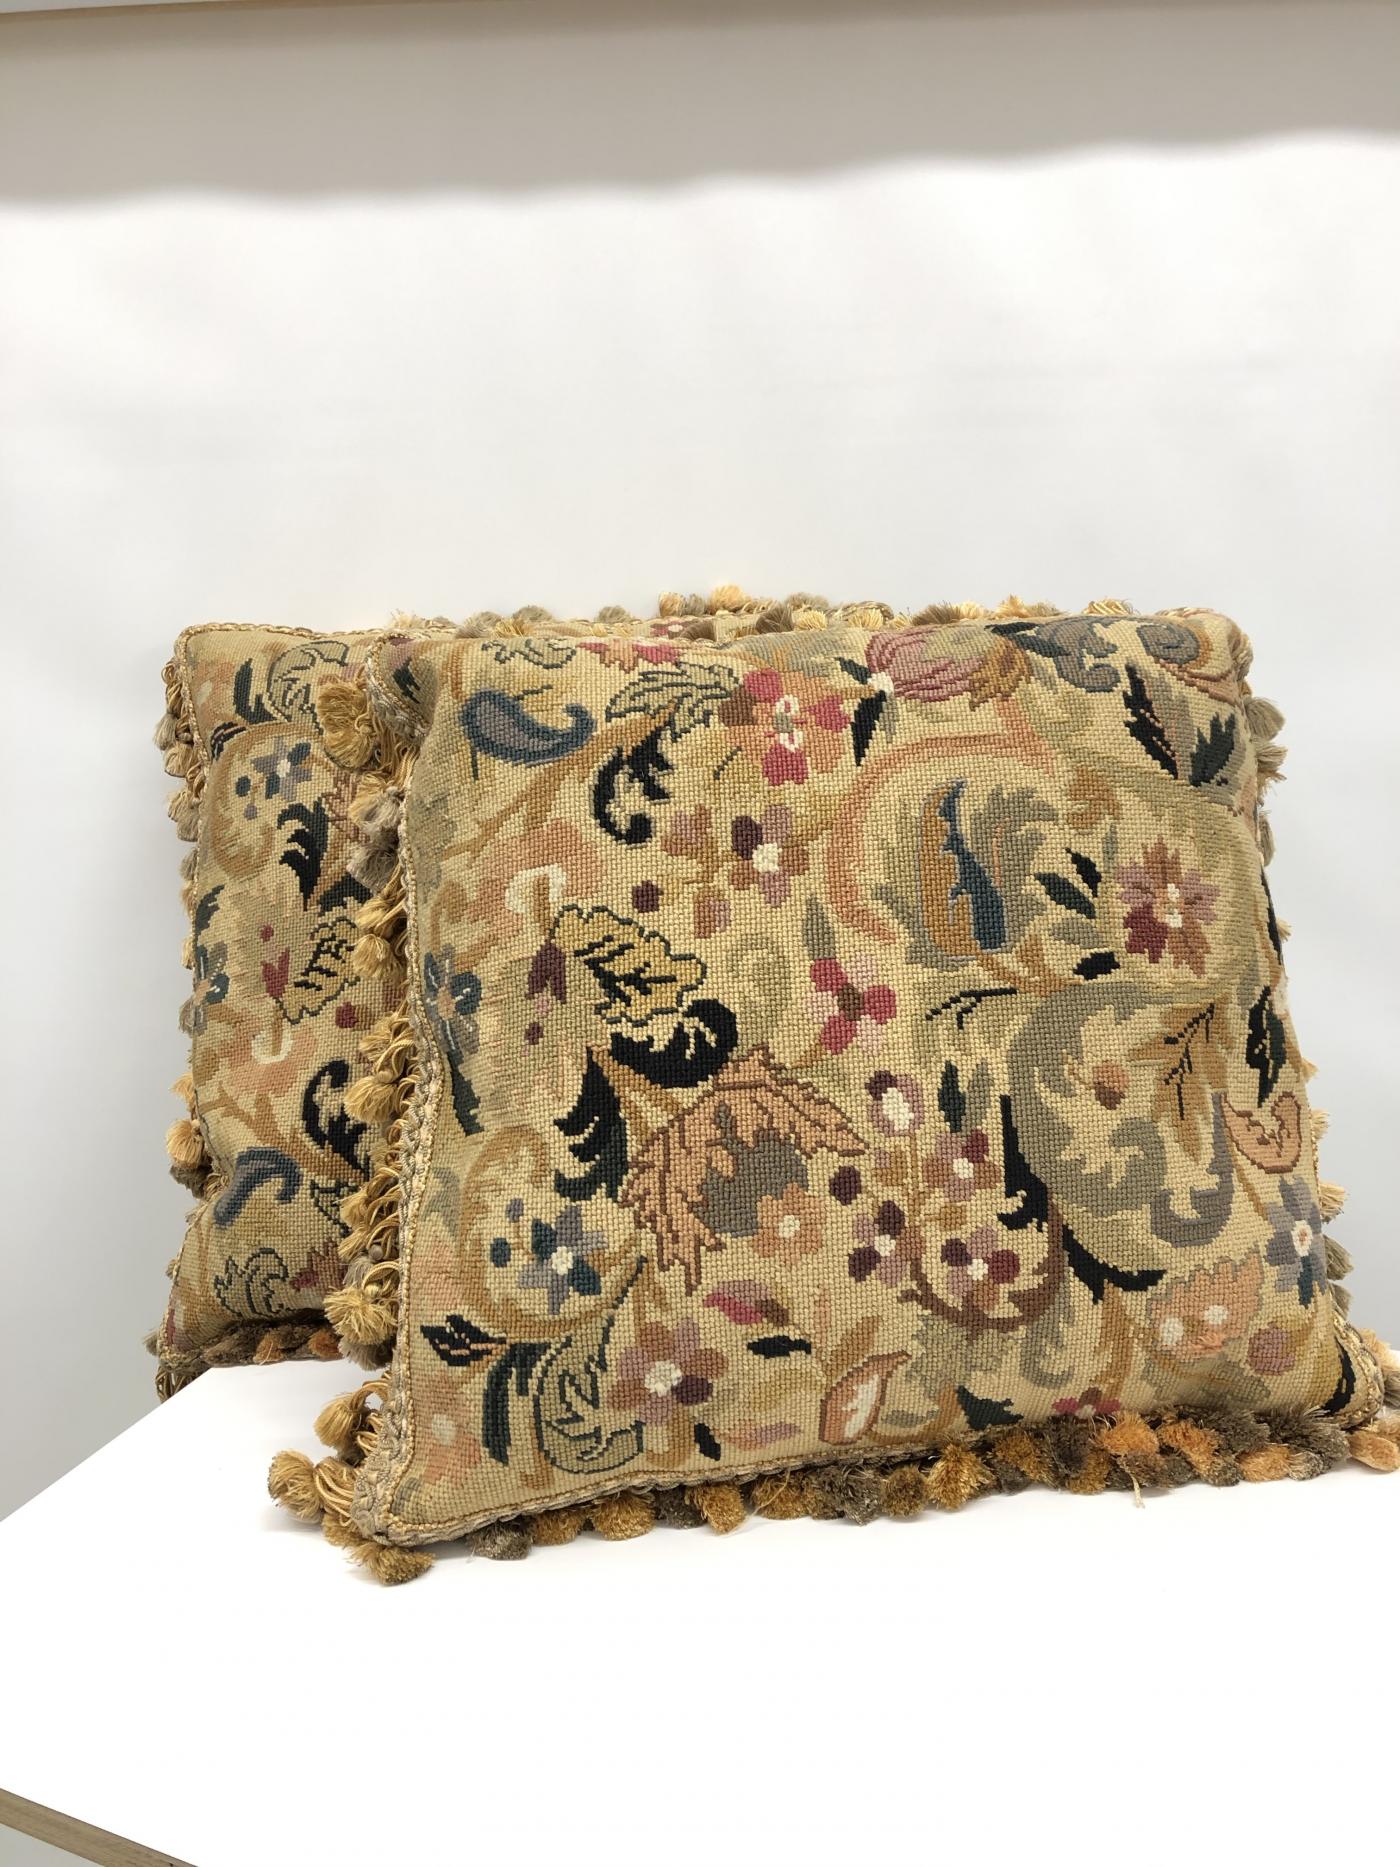 Pair of 19th century needlepoint pillows